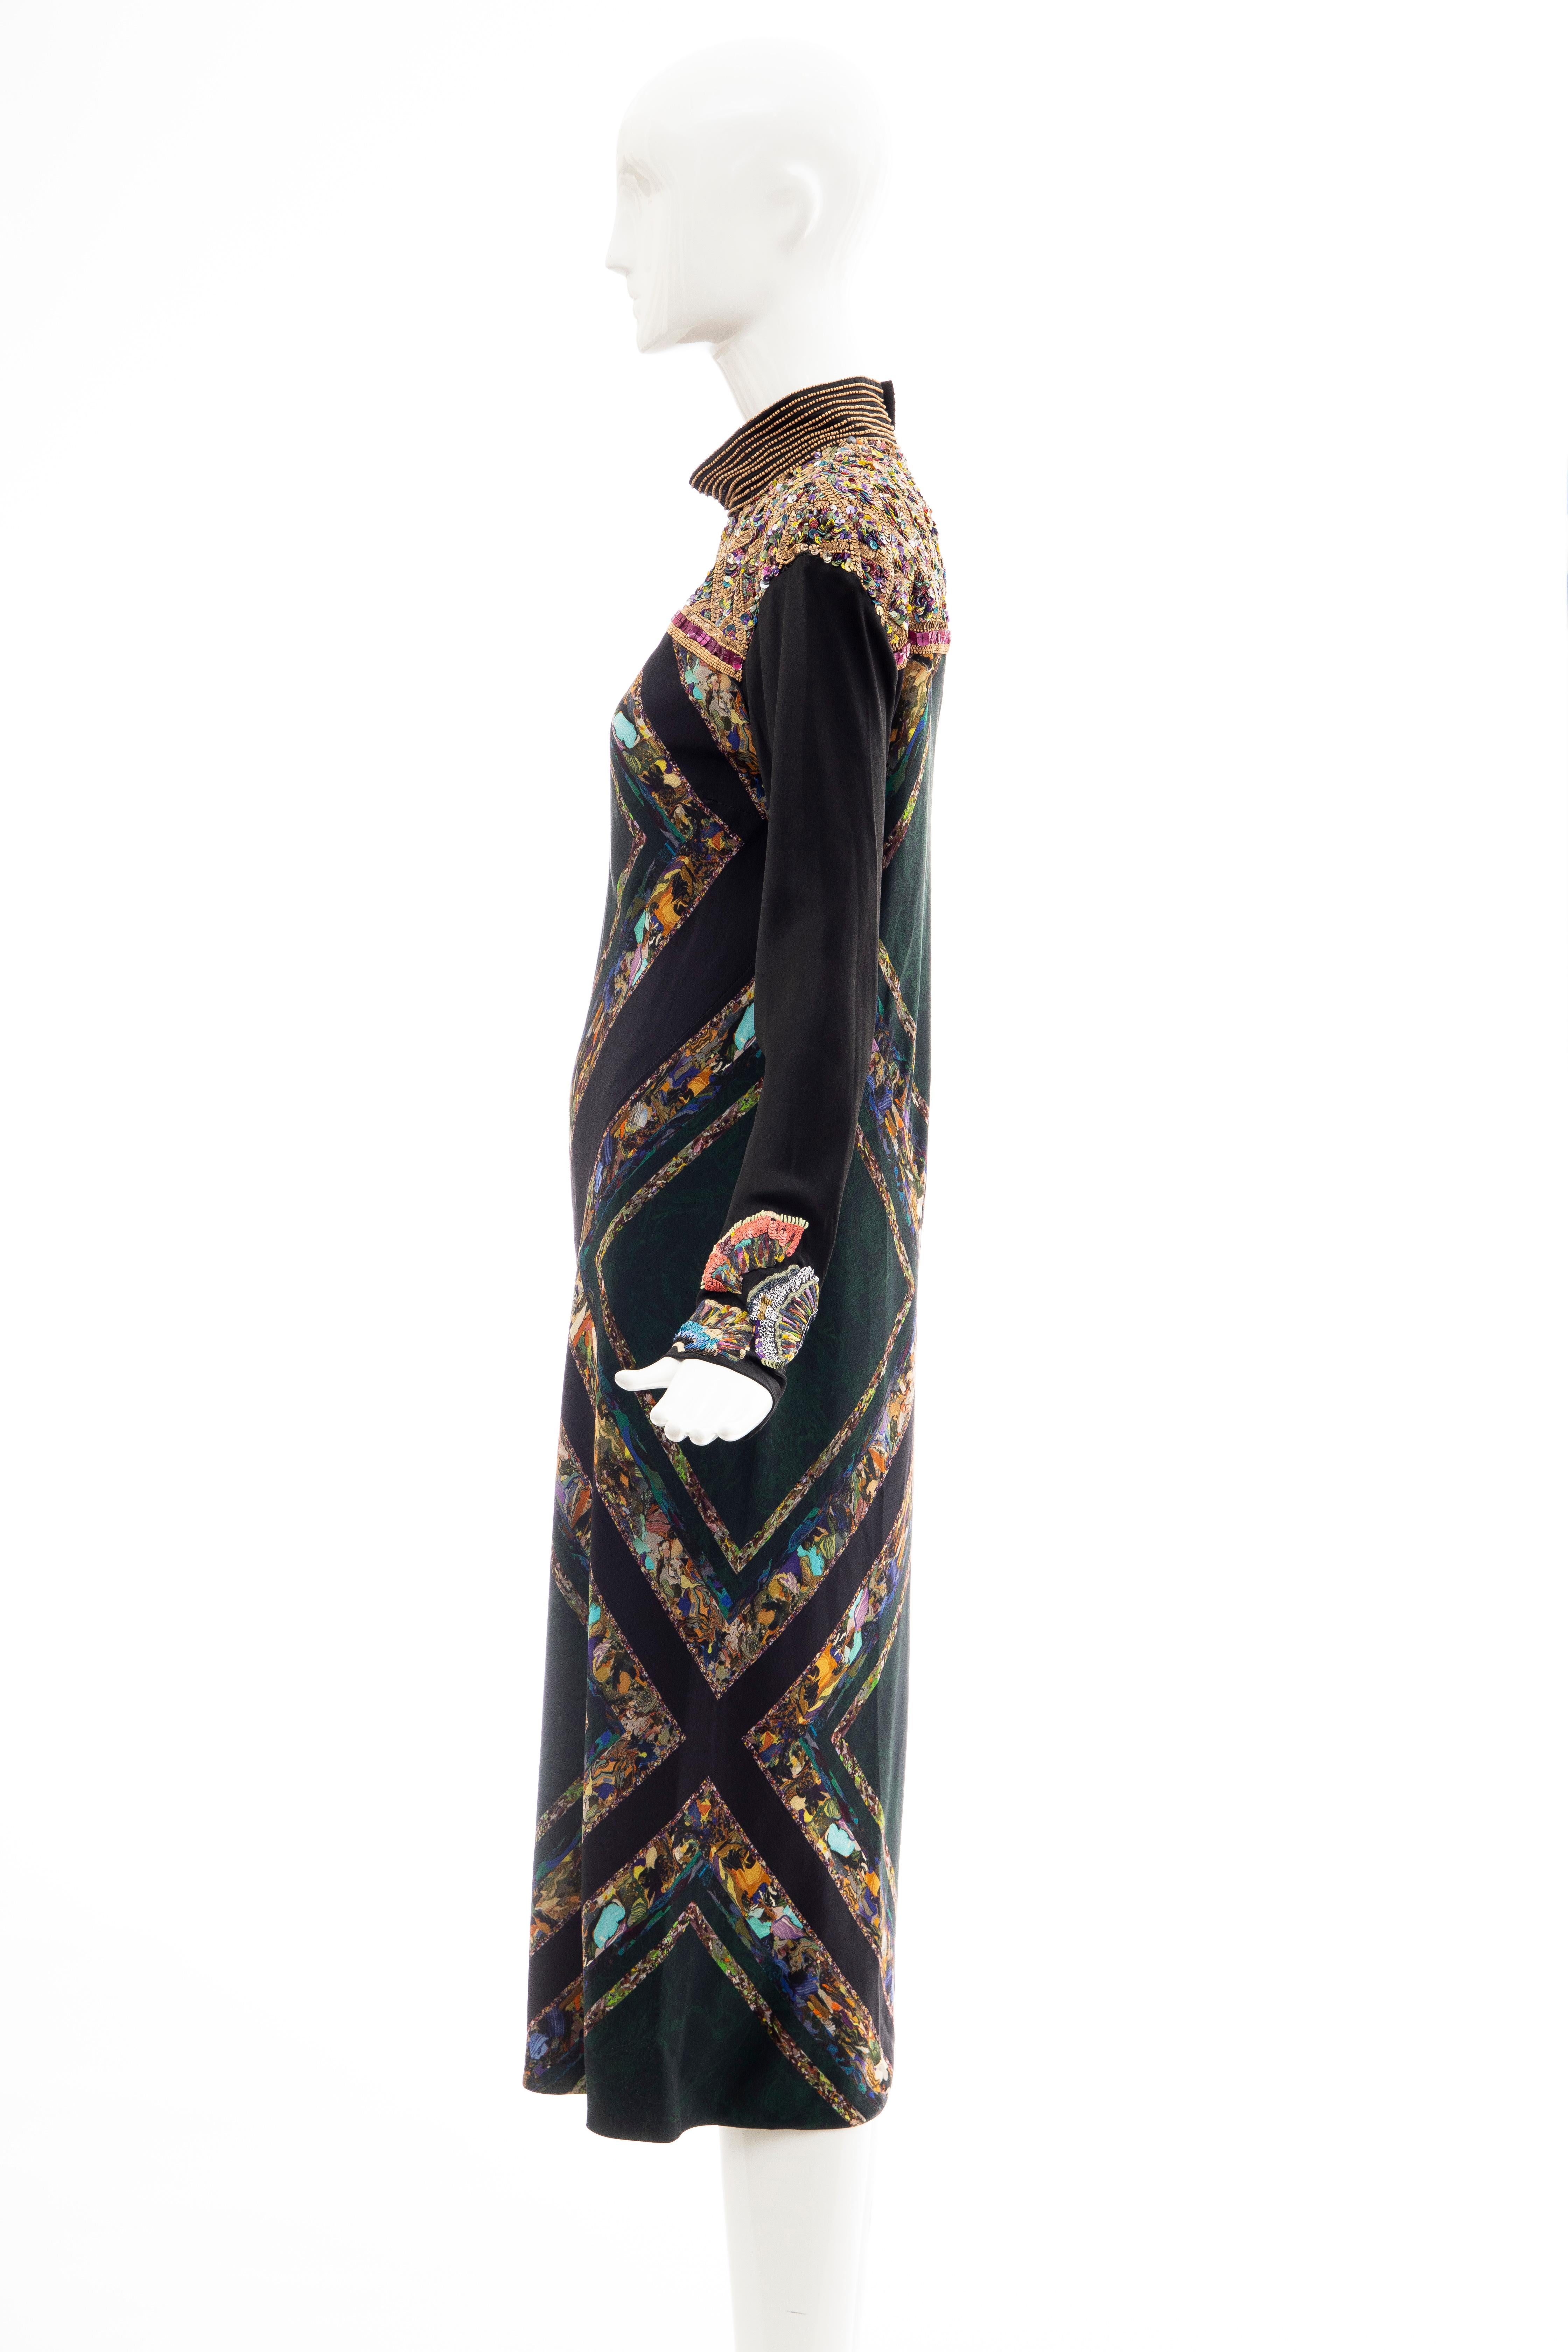 Dries van Noten Runway Bead & Sequin Embroidery Silk Printed Dress, Fall 2008 4